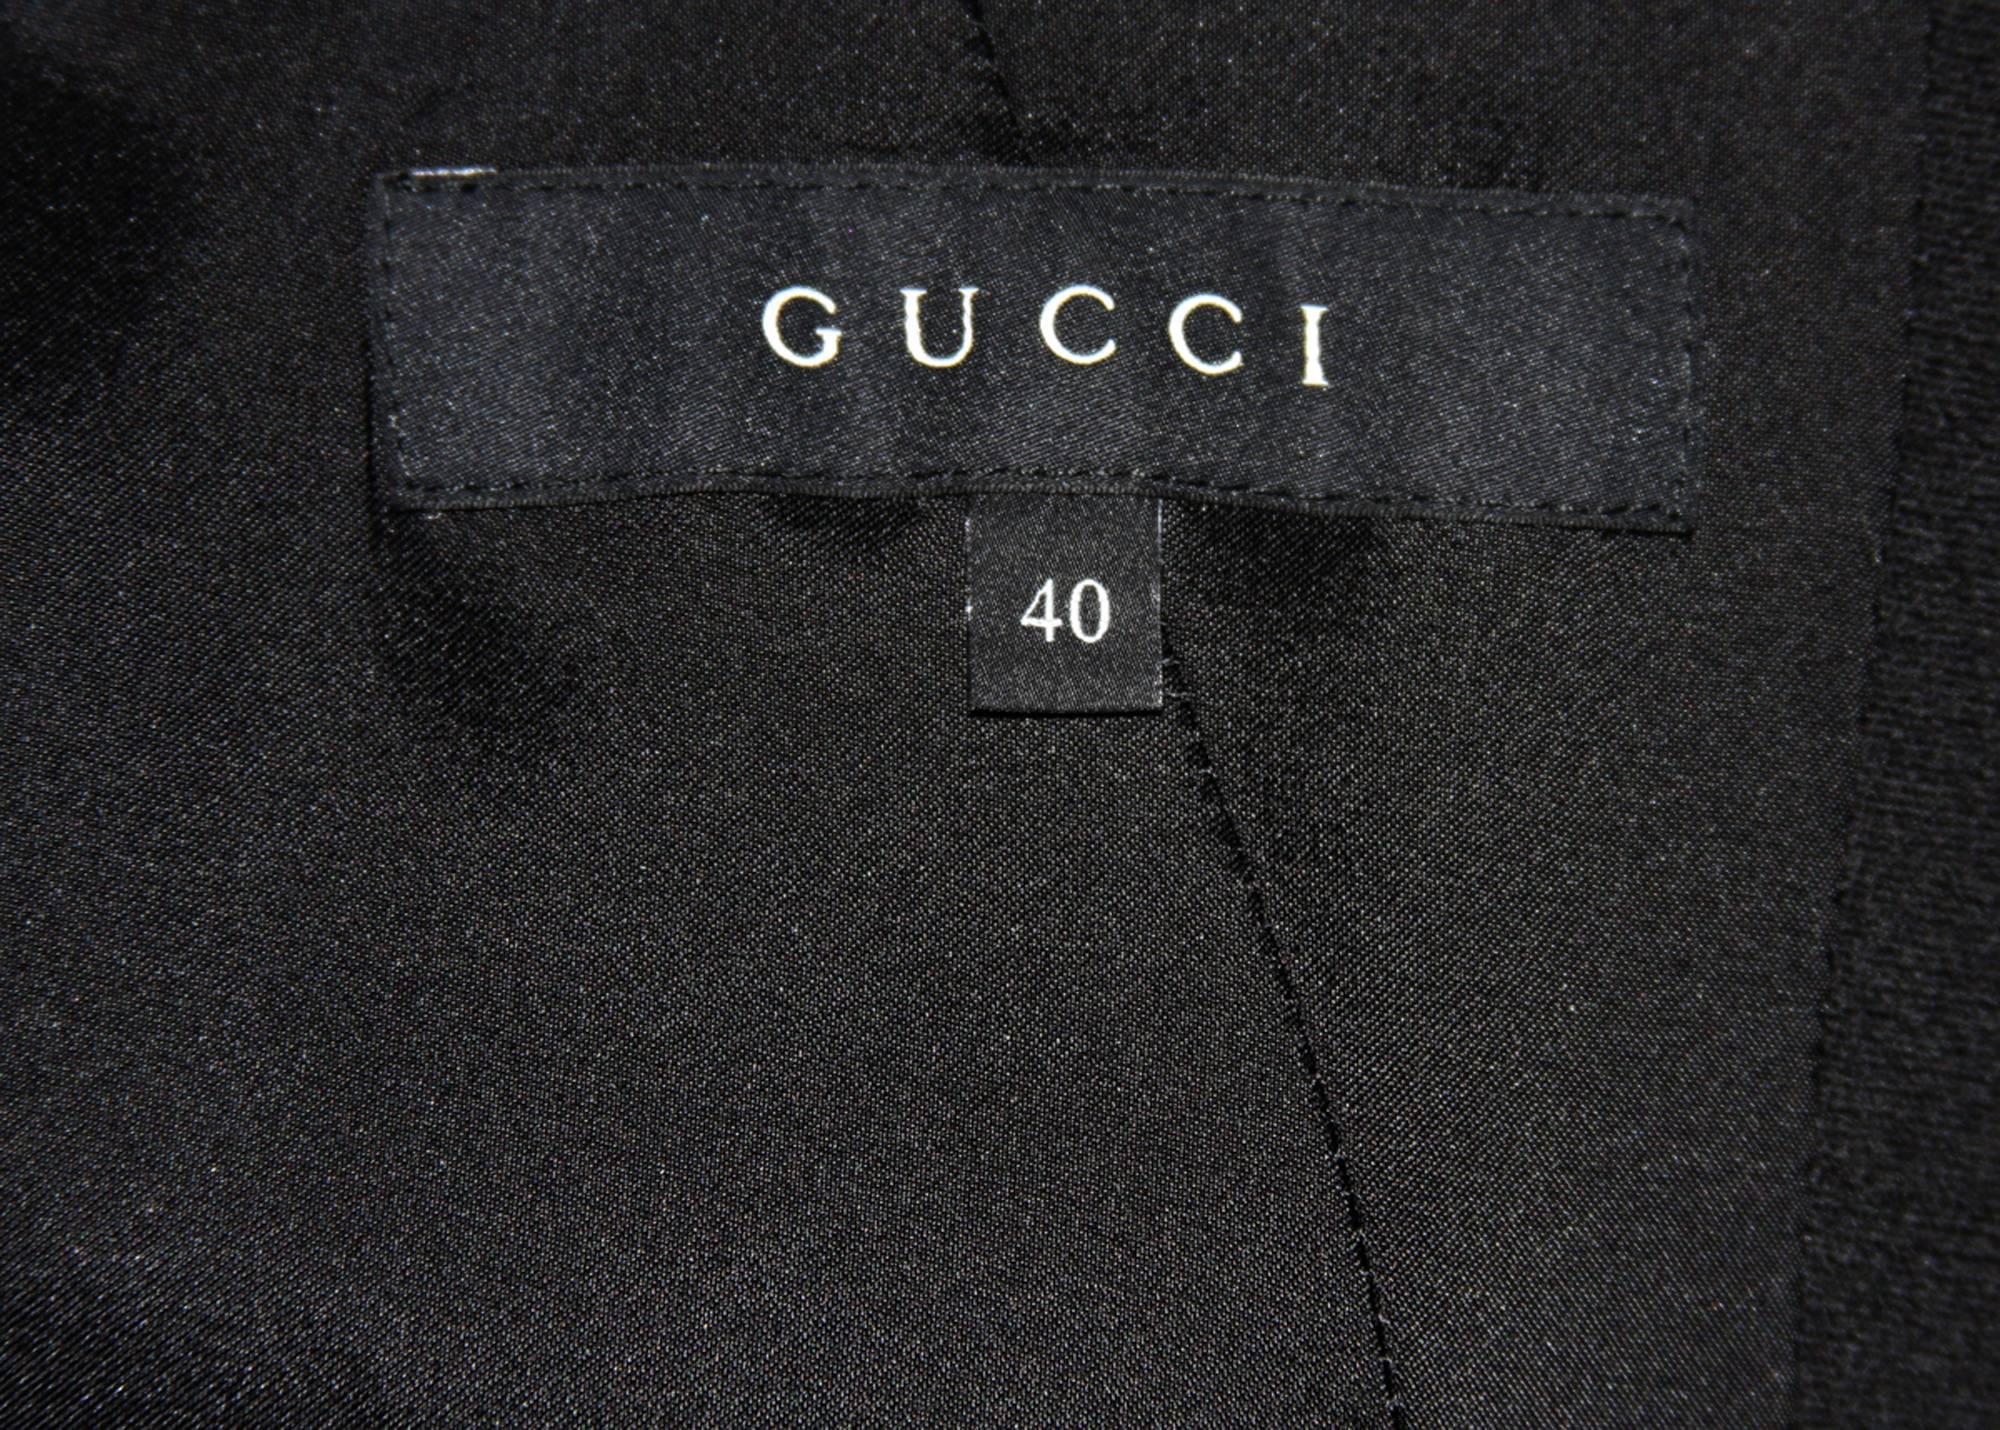 New GUCCI Runway Jacquard Wool Fern Motif Black Coat It. 40 - US 4/6 For Sale 3